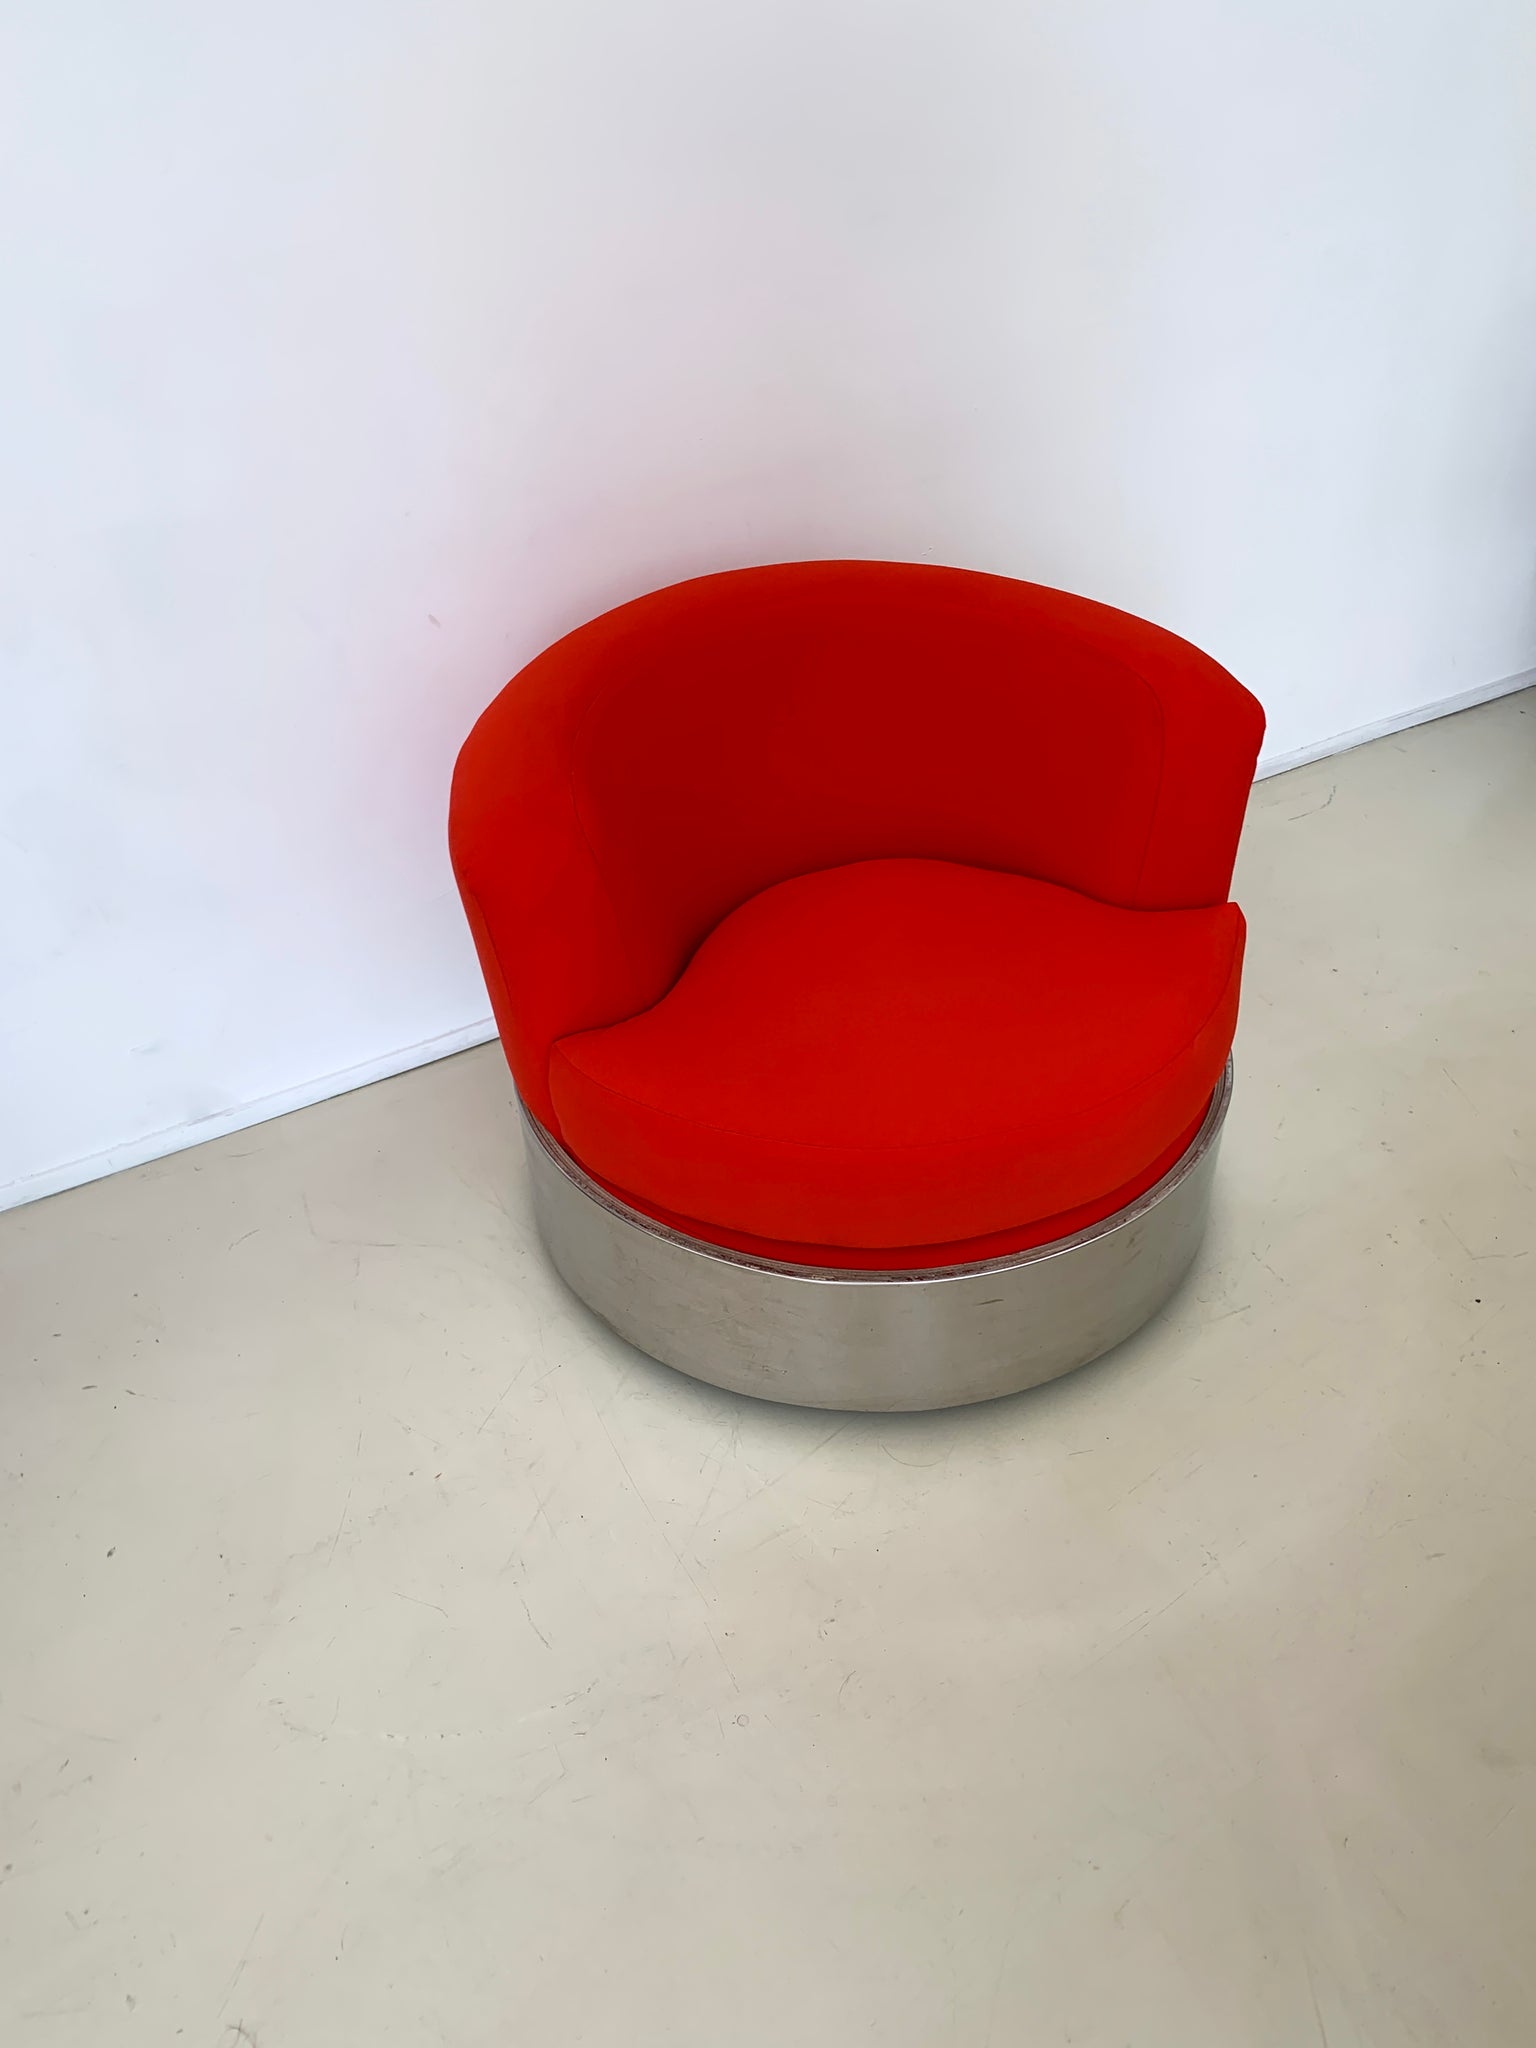 1970s Red/Orange Harvey Probber Round Chrome Chair